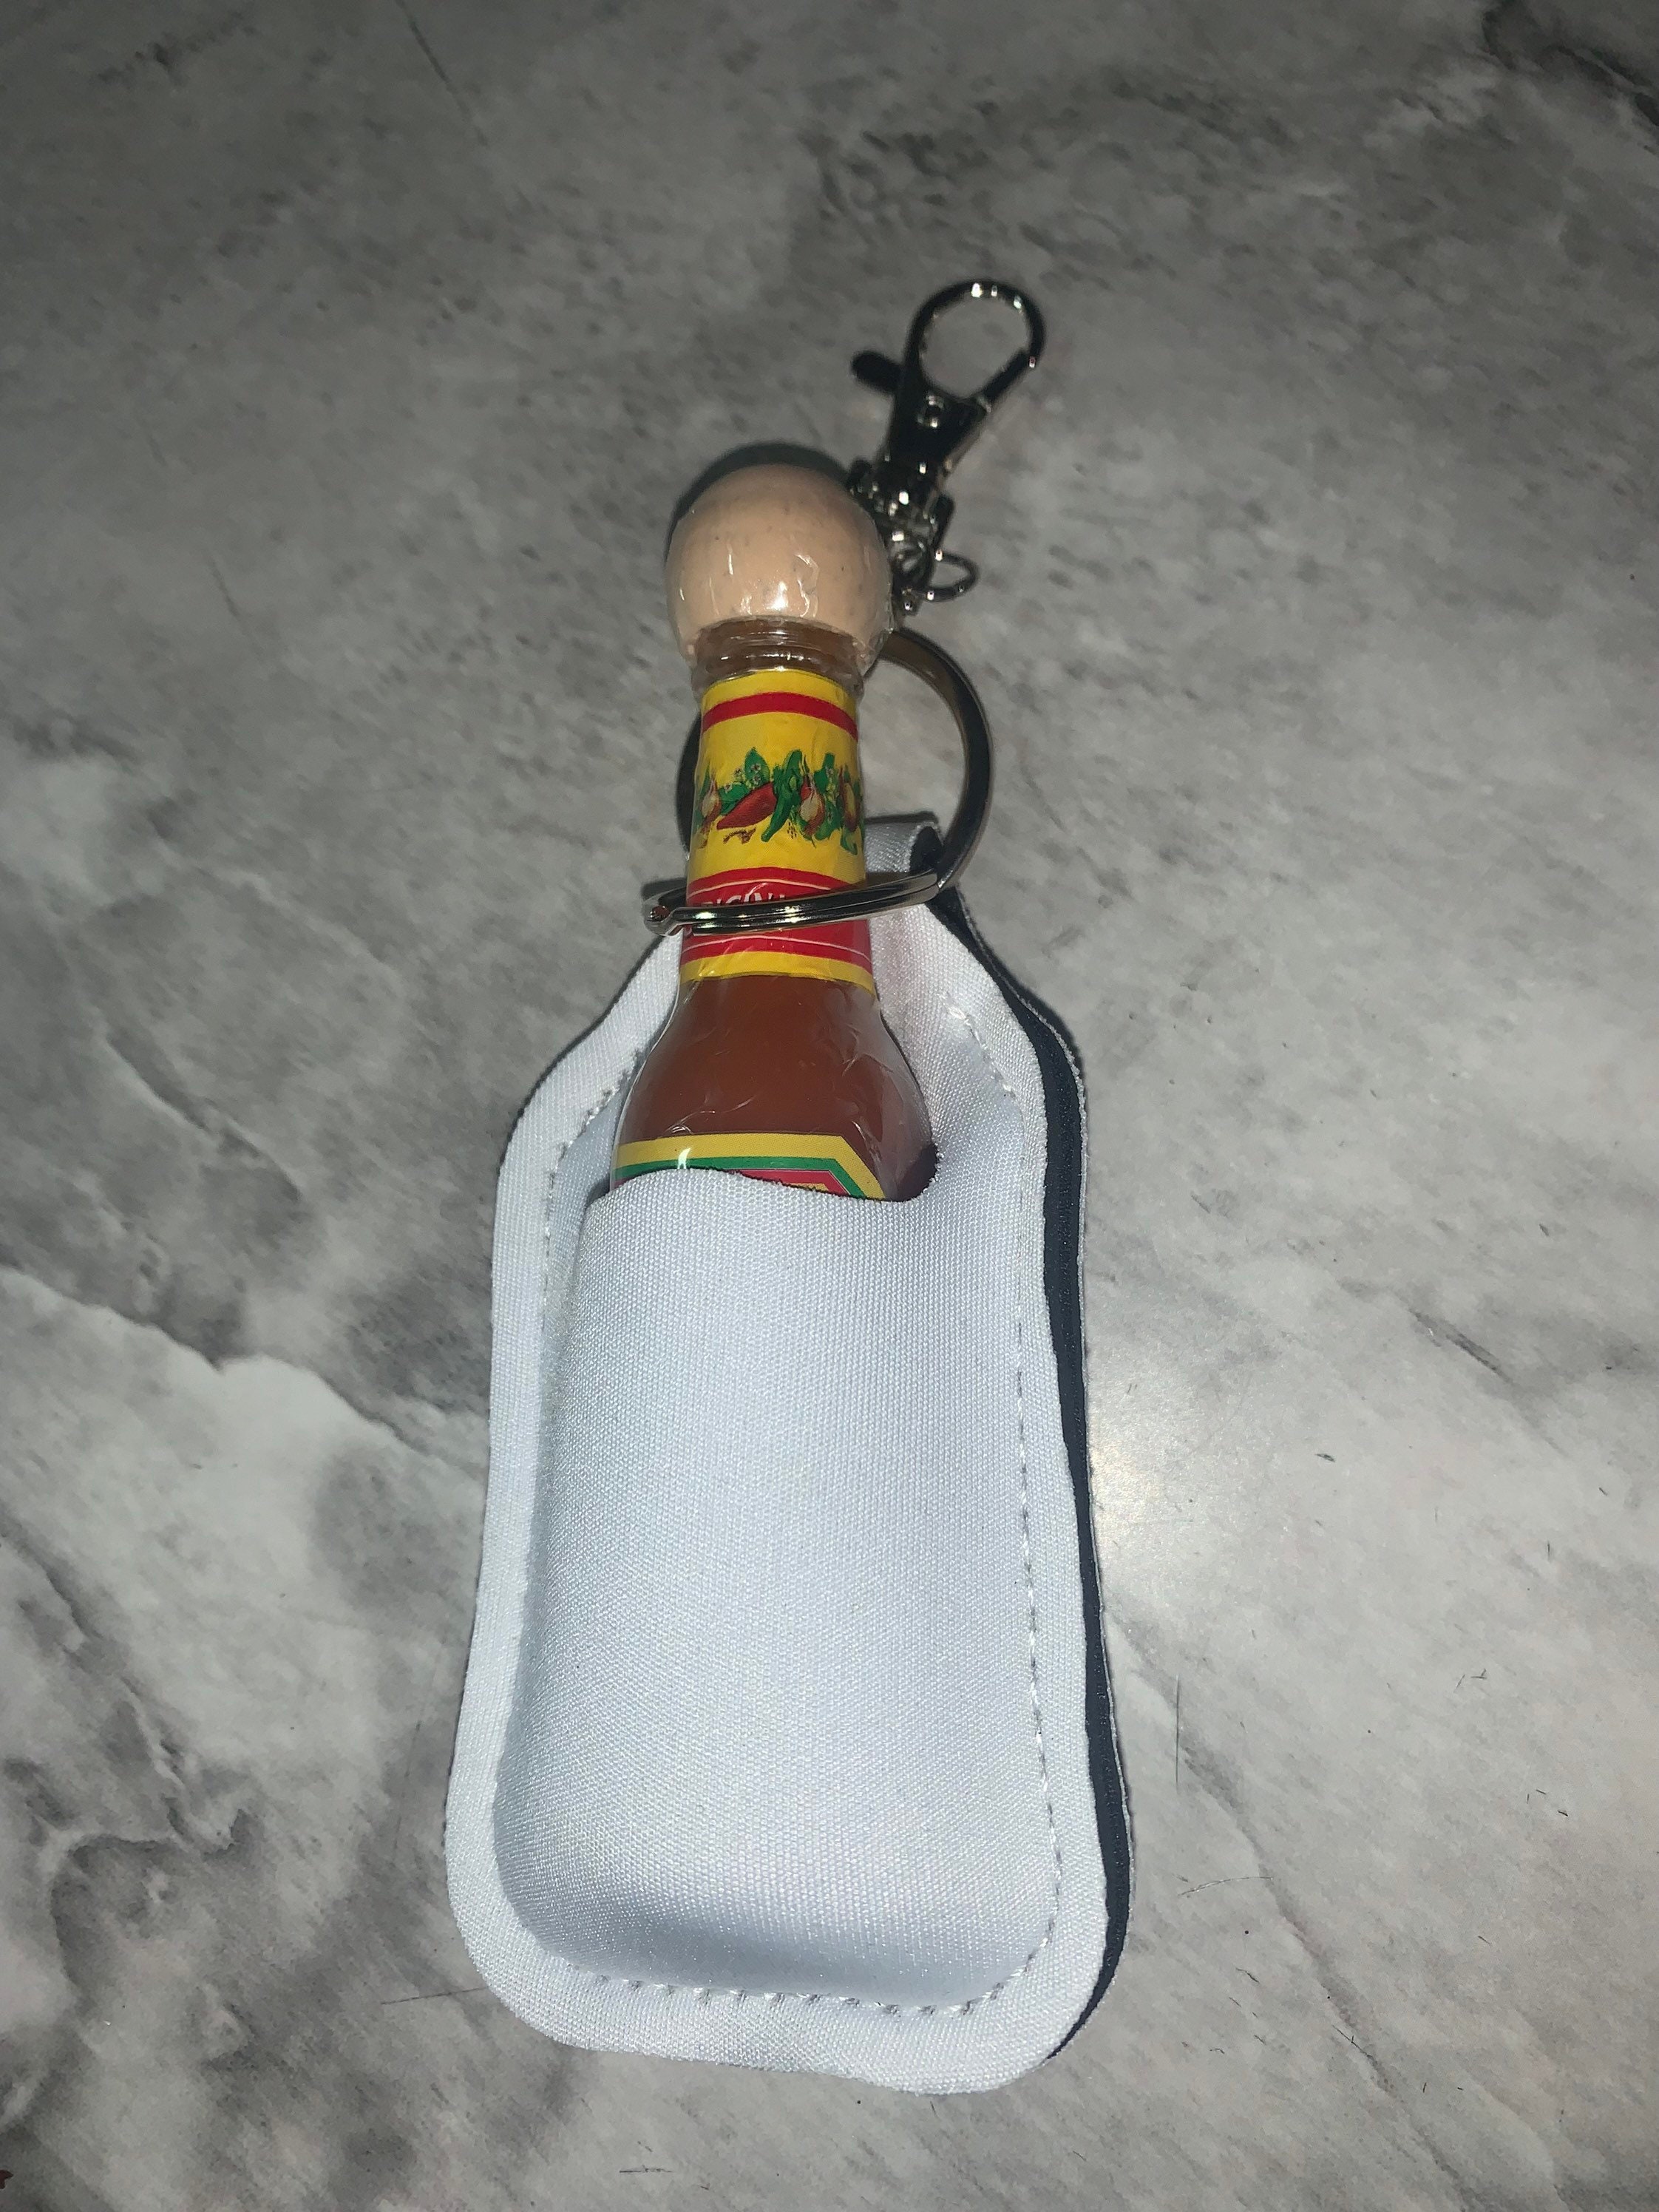 Personal Tajin or Personal Cholula Hot Sauce keychain